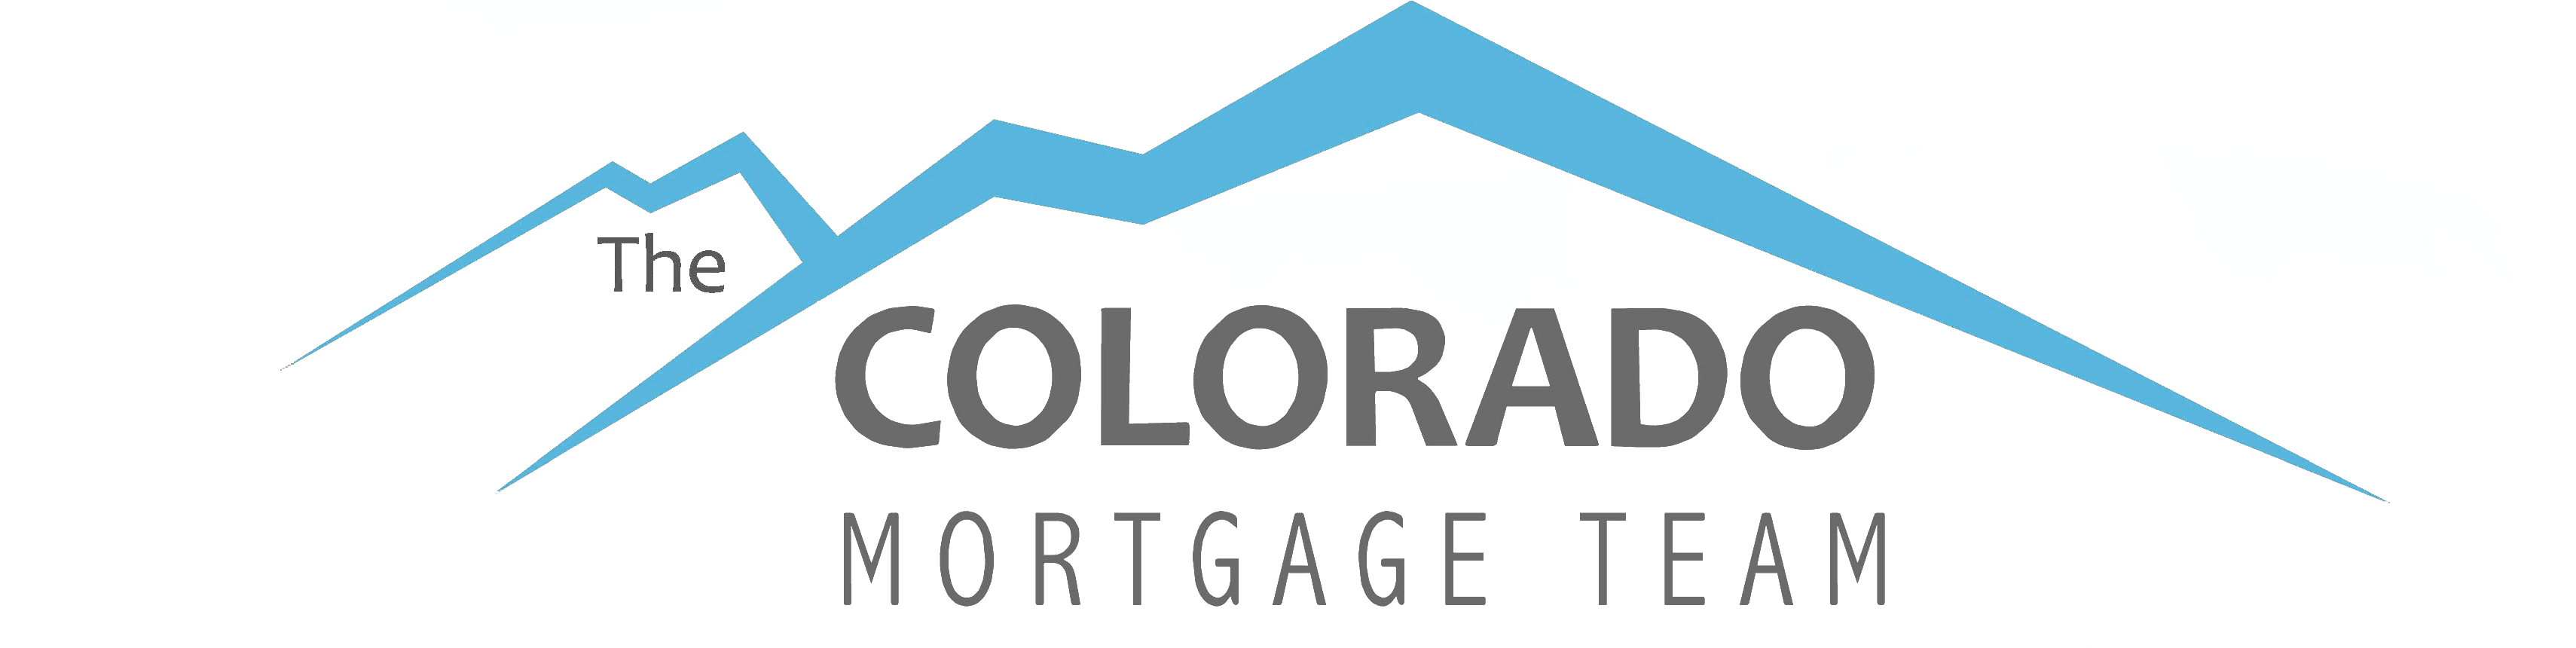 The Colorado Mortgage Team logo